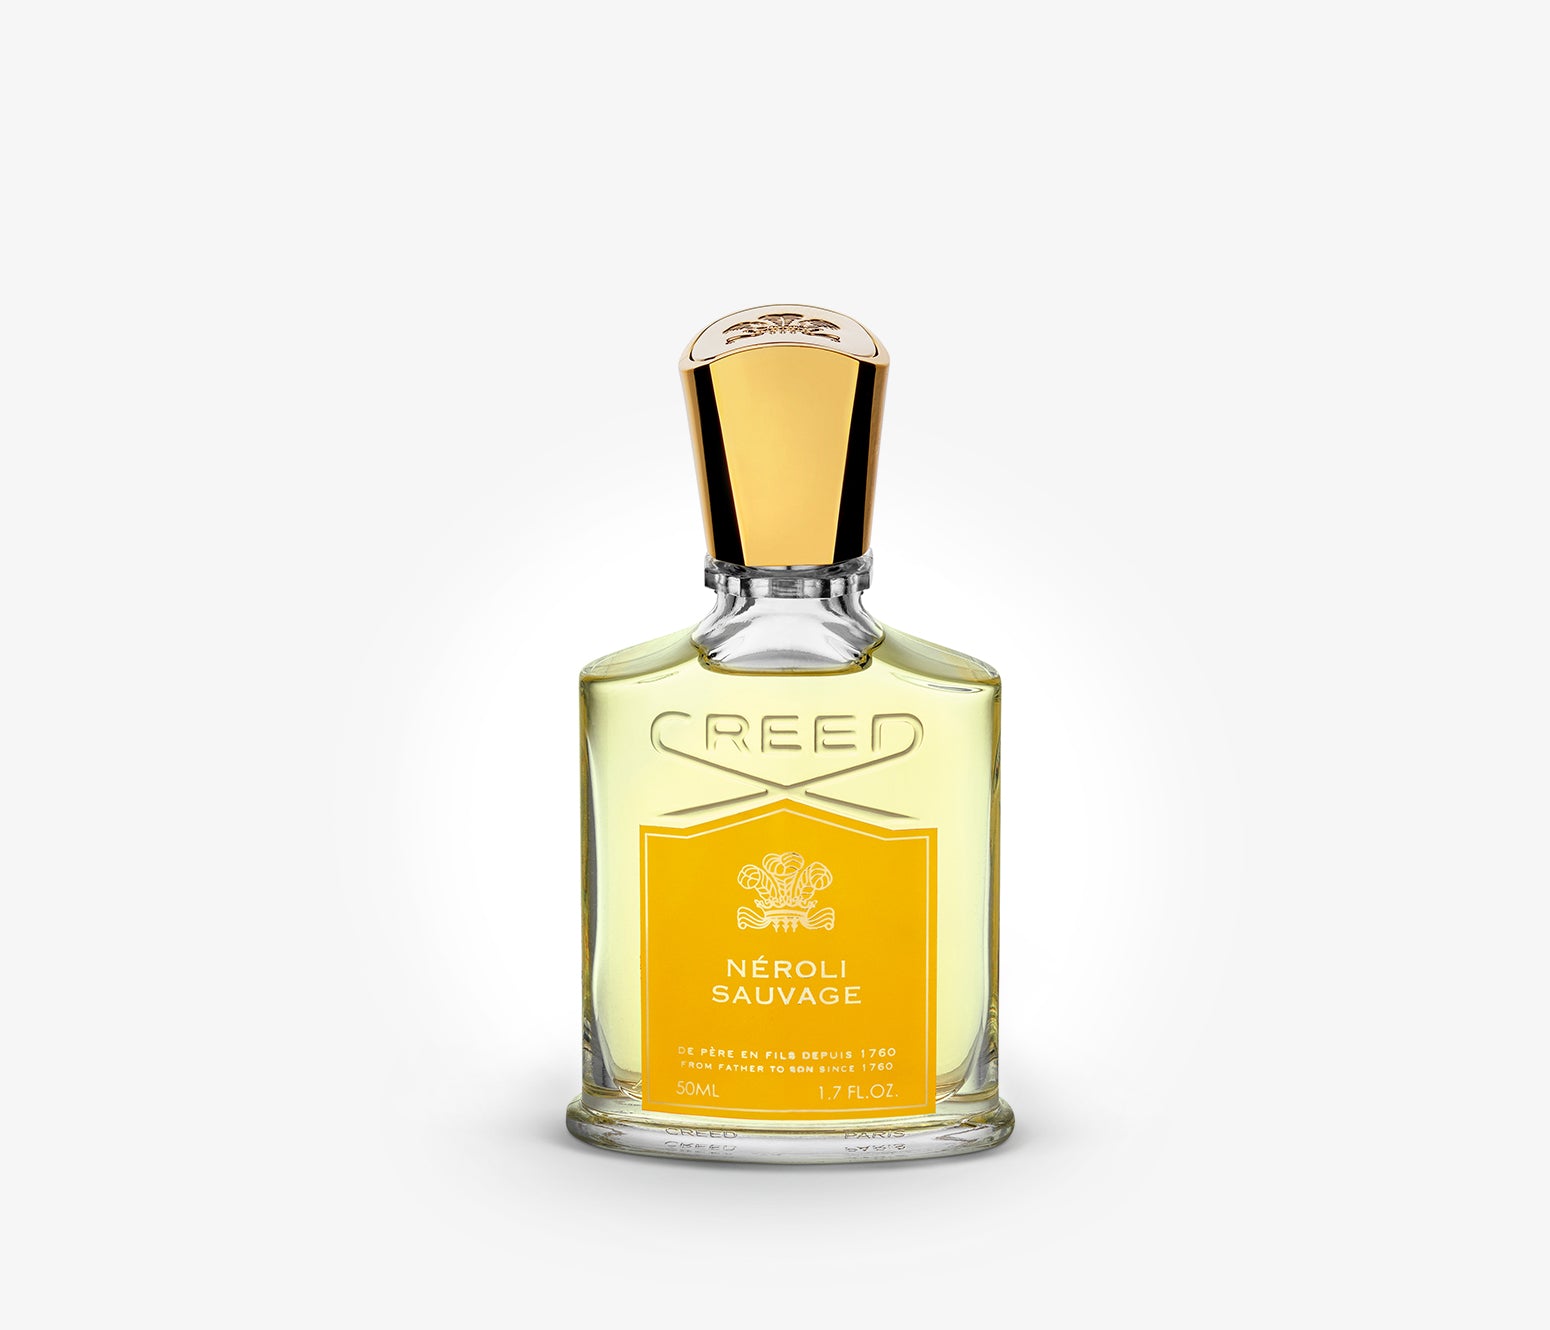 Creed - Neroli Sauvage - 50ml - 10001037 - Product Image - Fragrance - Les Senteurs